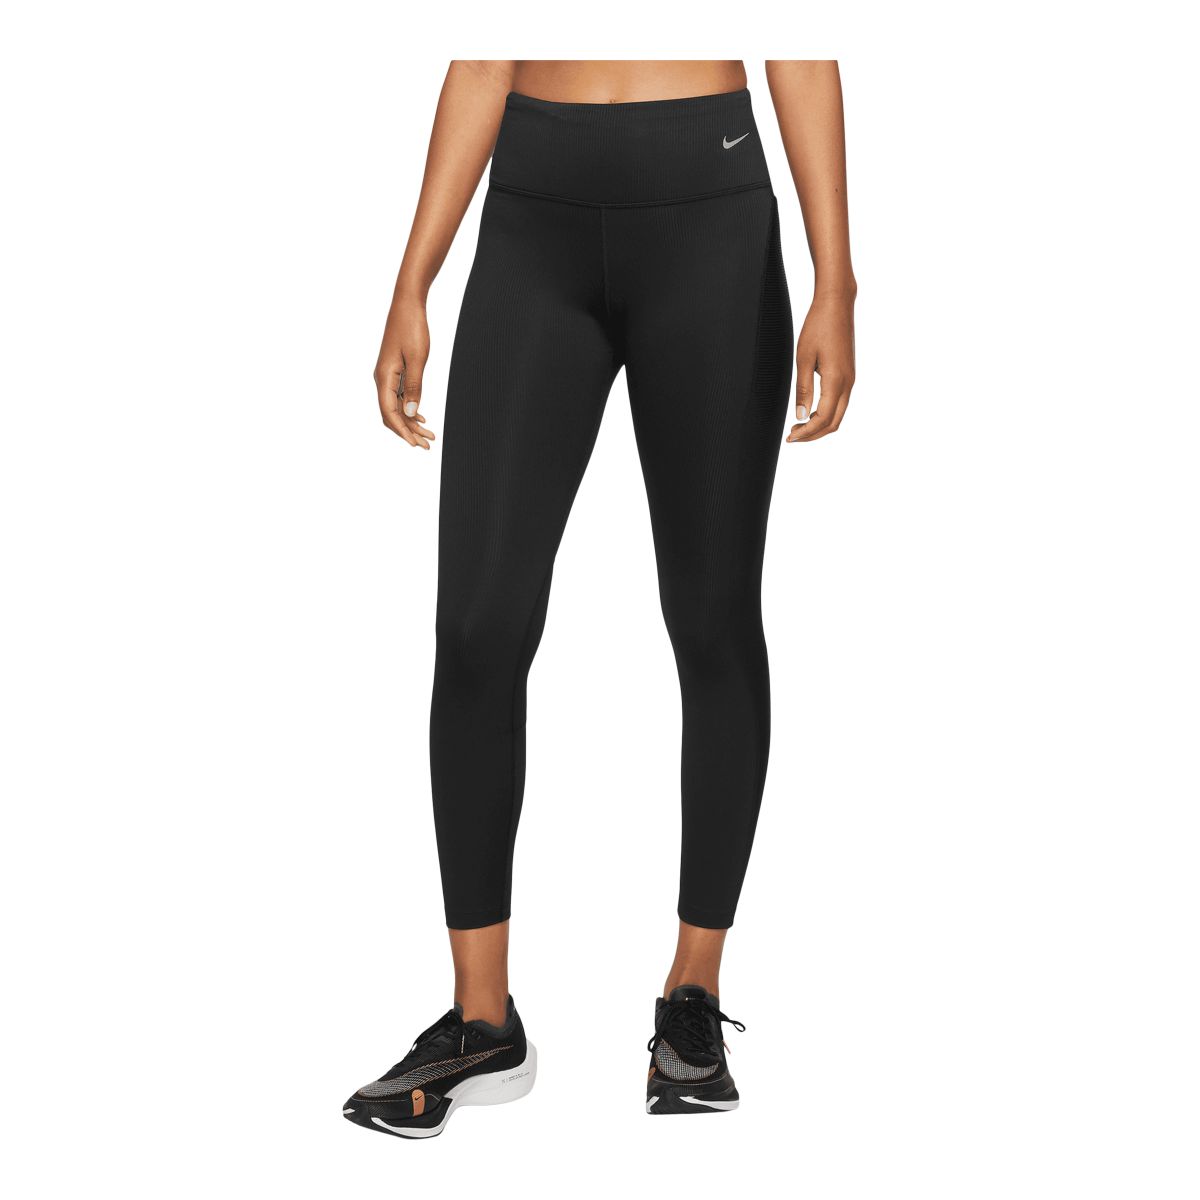 NWOT Nike Dri Fit Legend Classic Fit Leggings 2.0 in Black Women's Size XS  